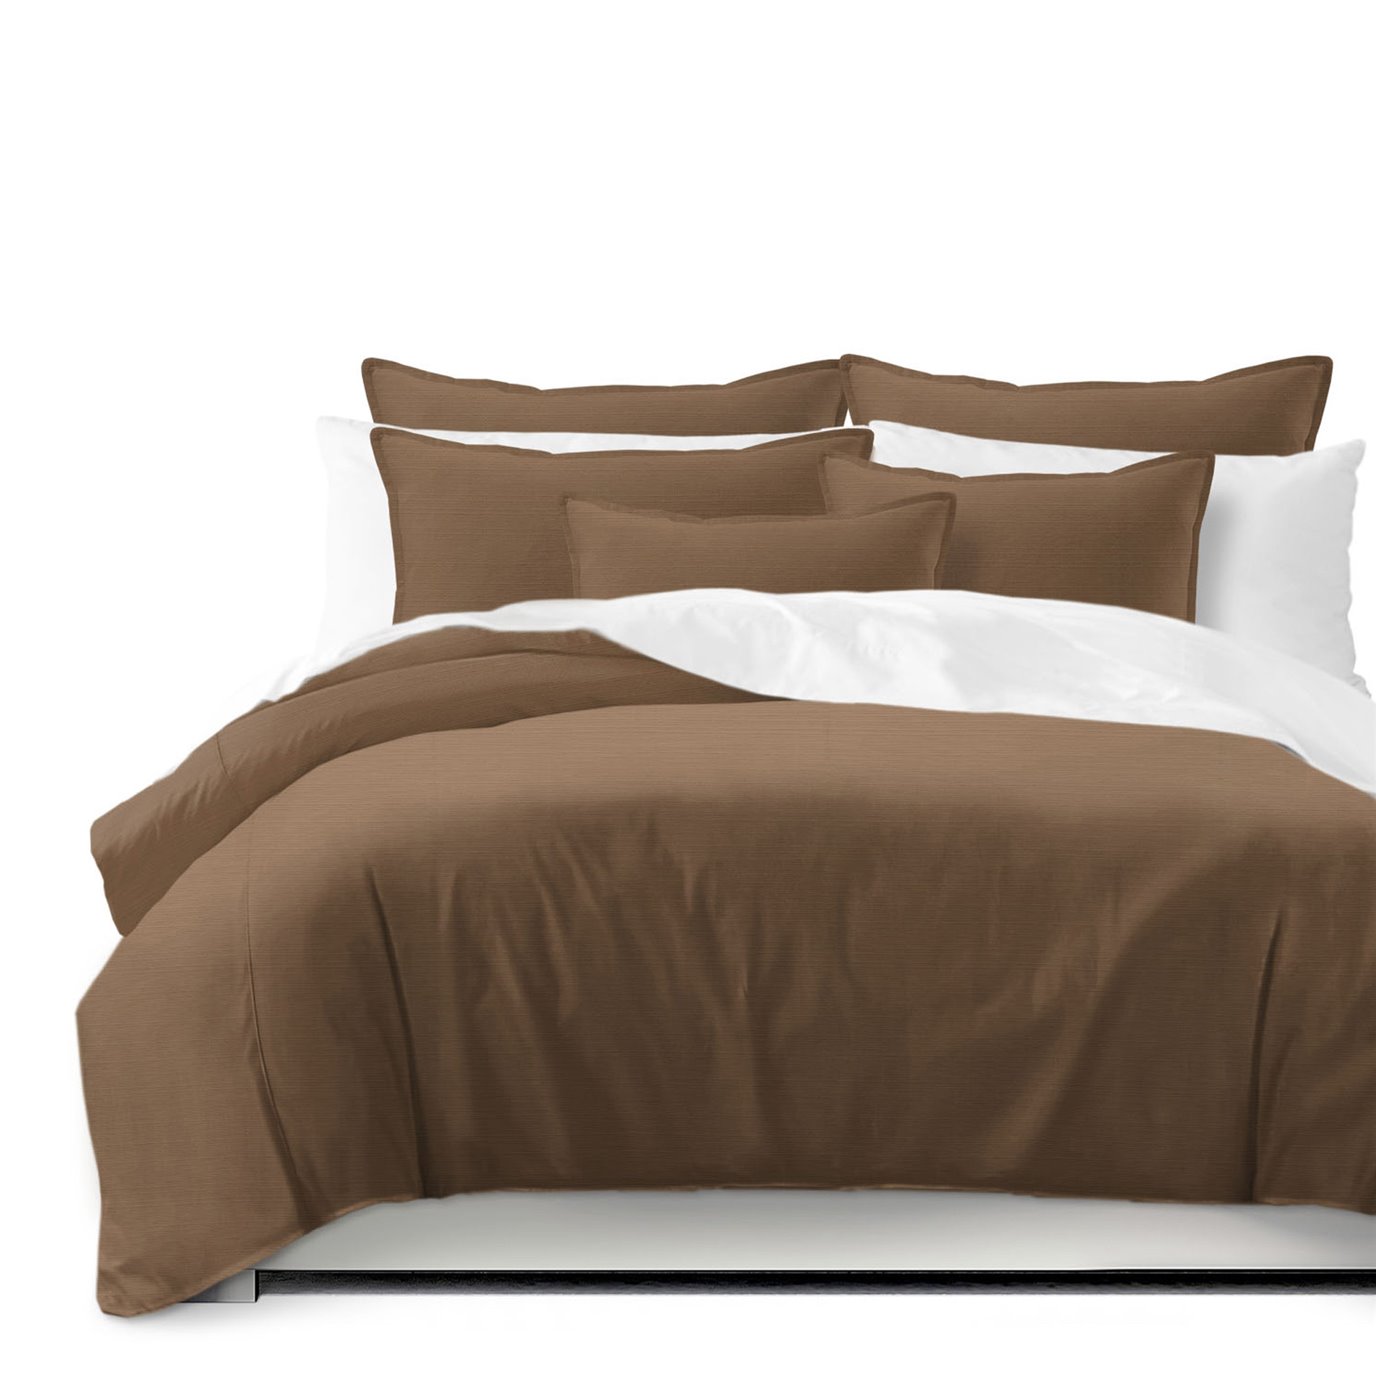 Nova Walnut Comforter and Pillow Sham(s) Set - Size King / California King